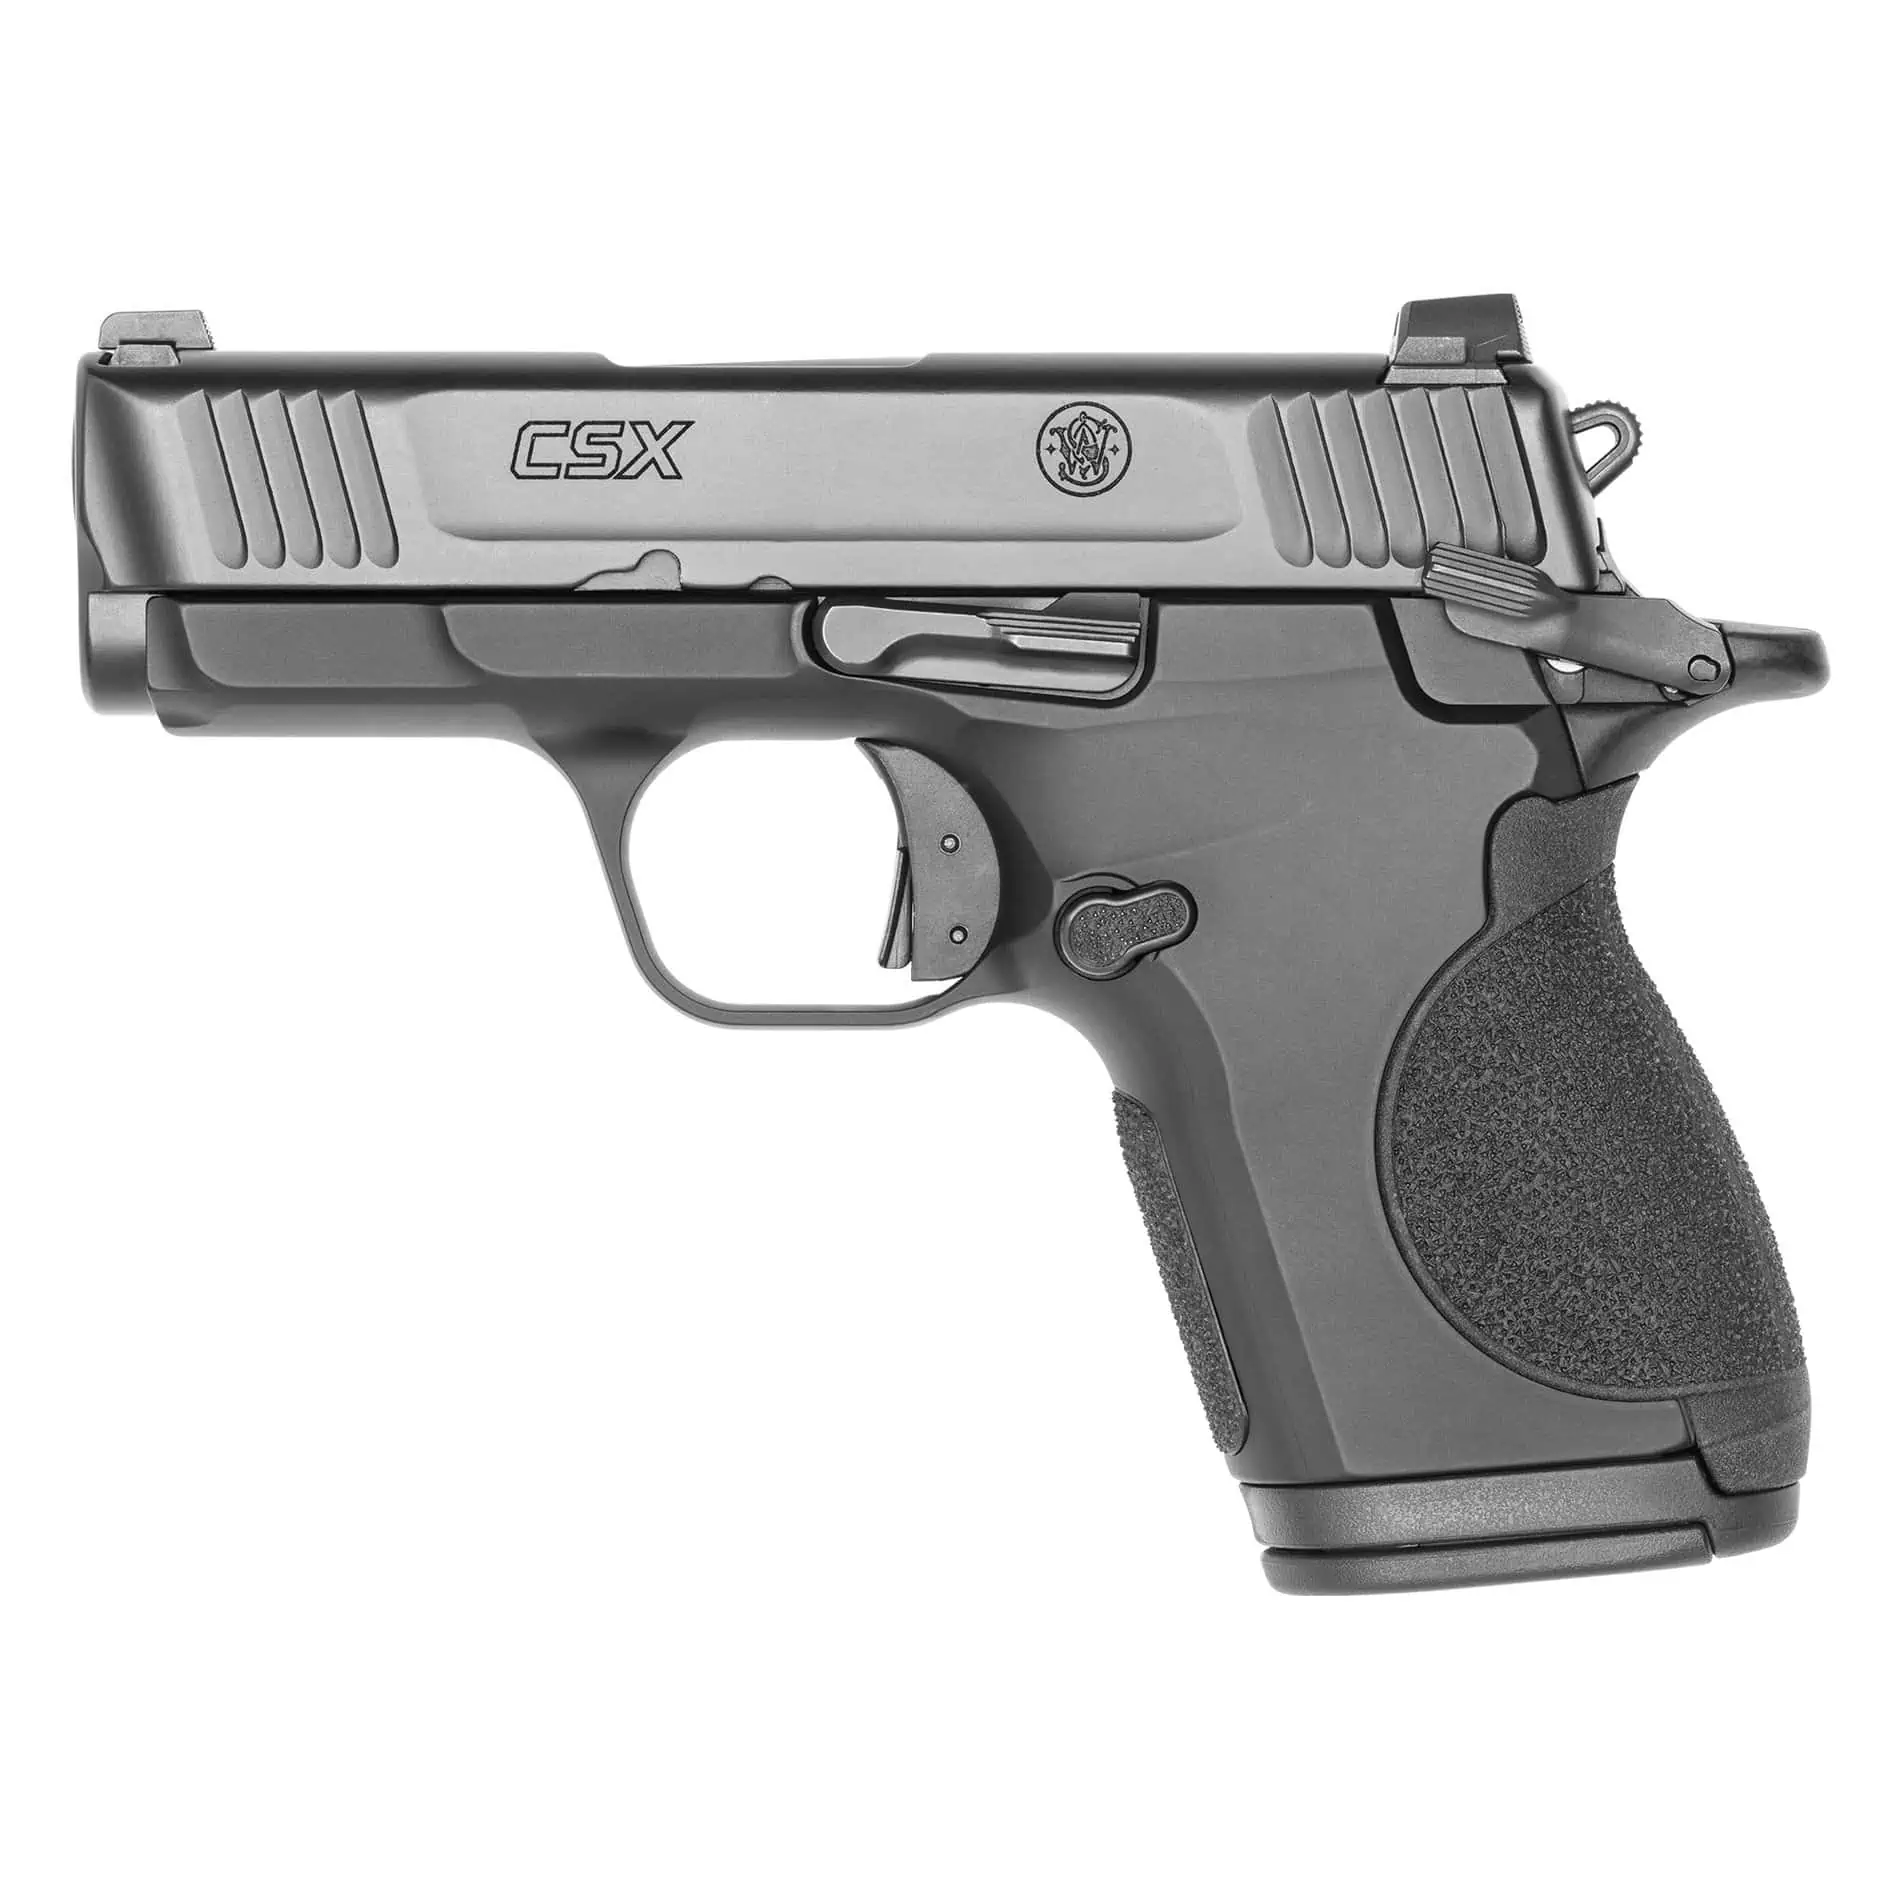 S&W CSX 9mm 3.1" Pistol - 12 Round - Black - Manual Safety